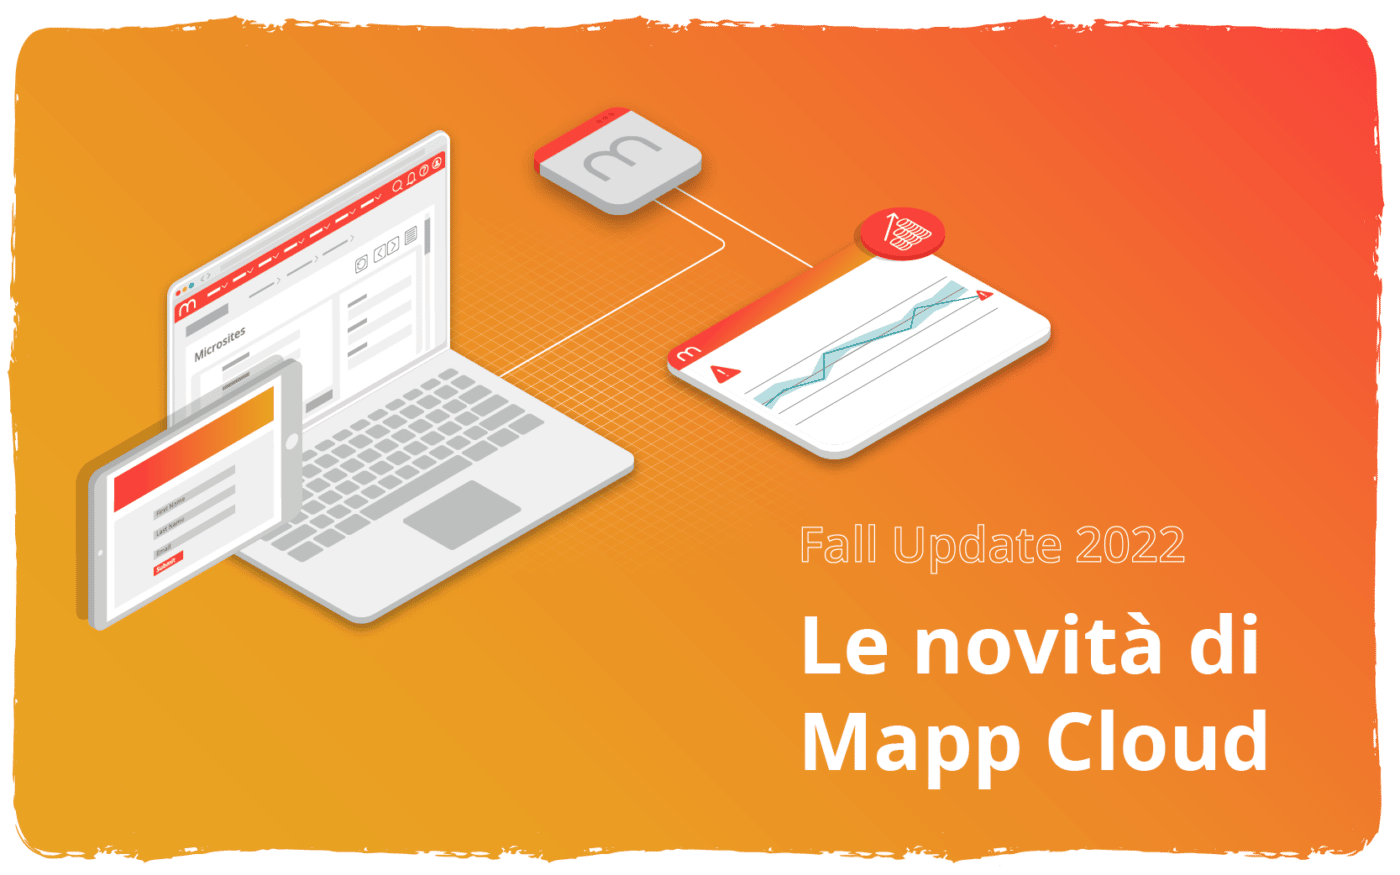 Fall Update di Mapp Cloud: nuove notifiche intelligenti e nove aggiornamenti